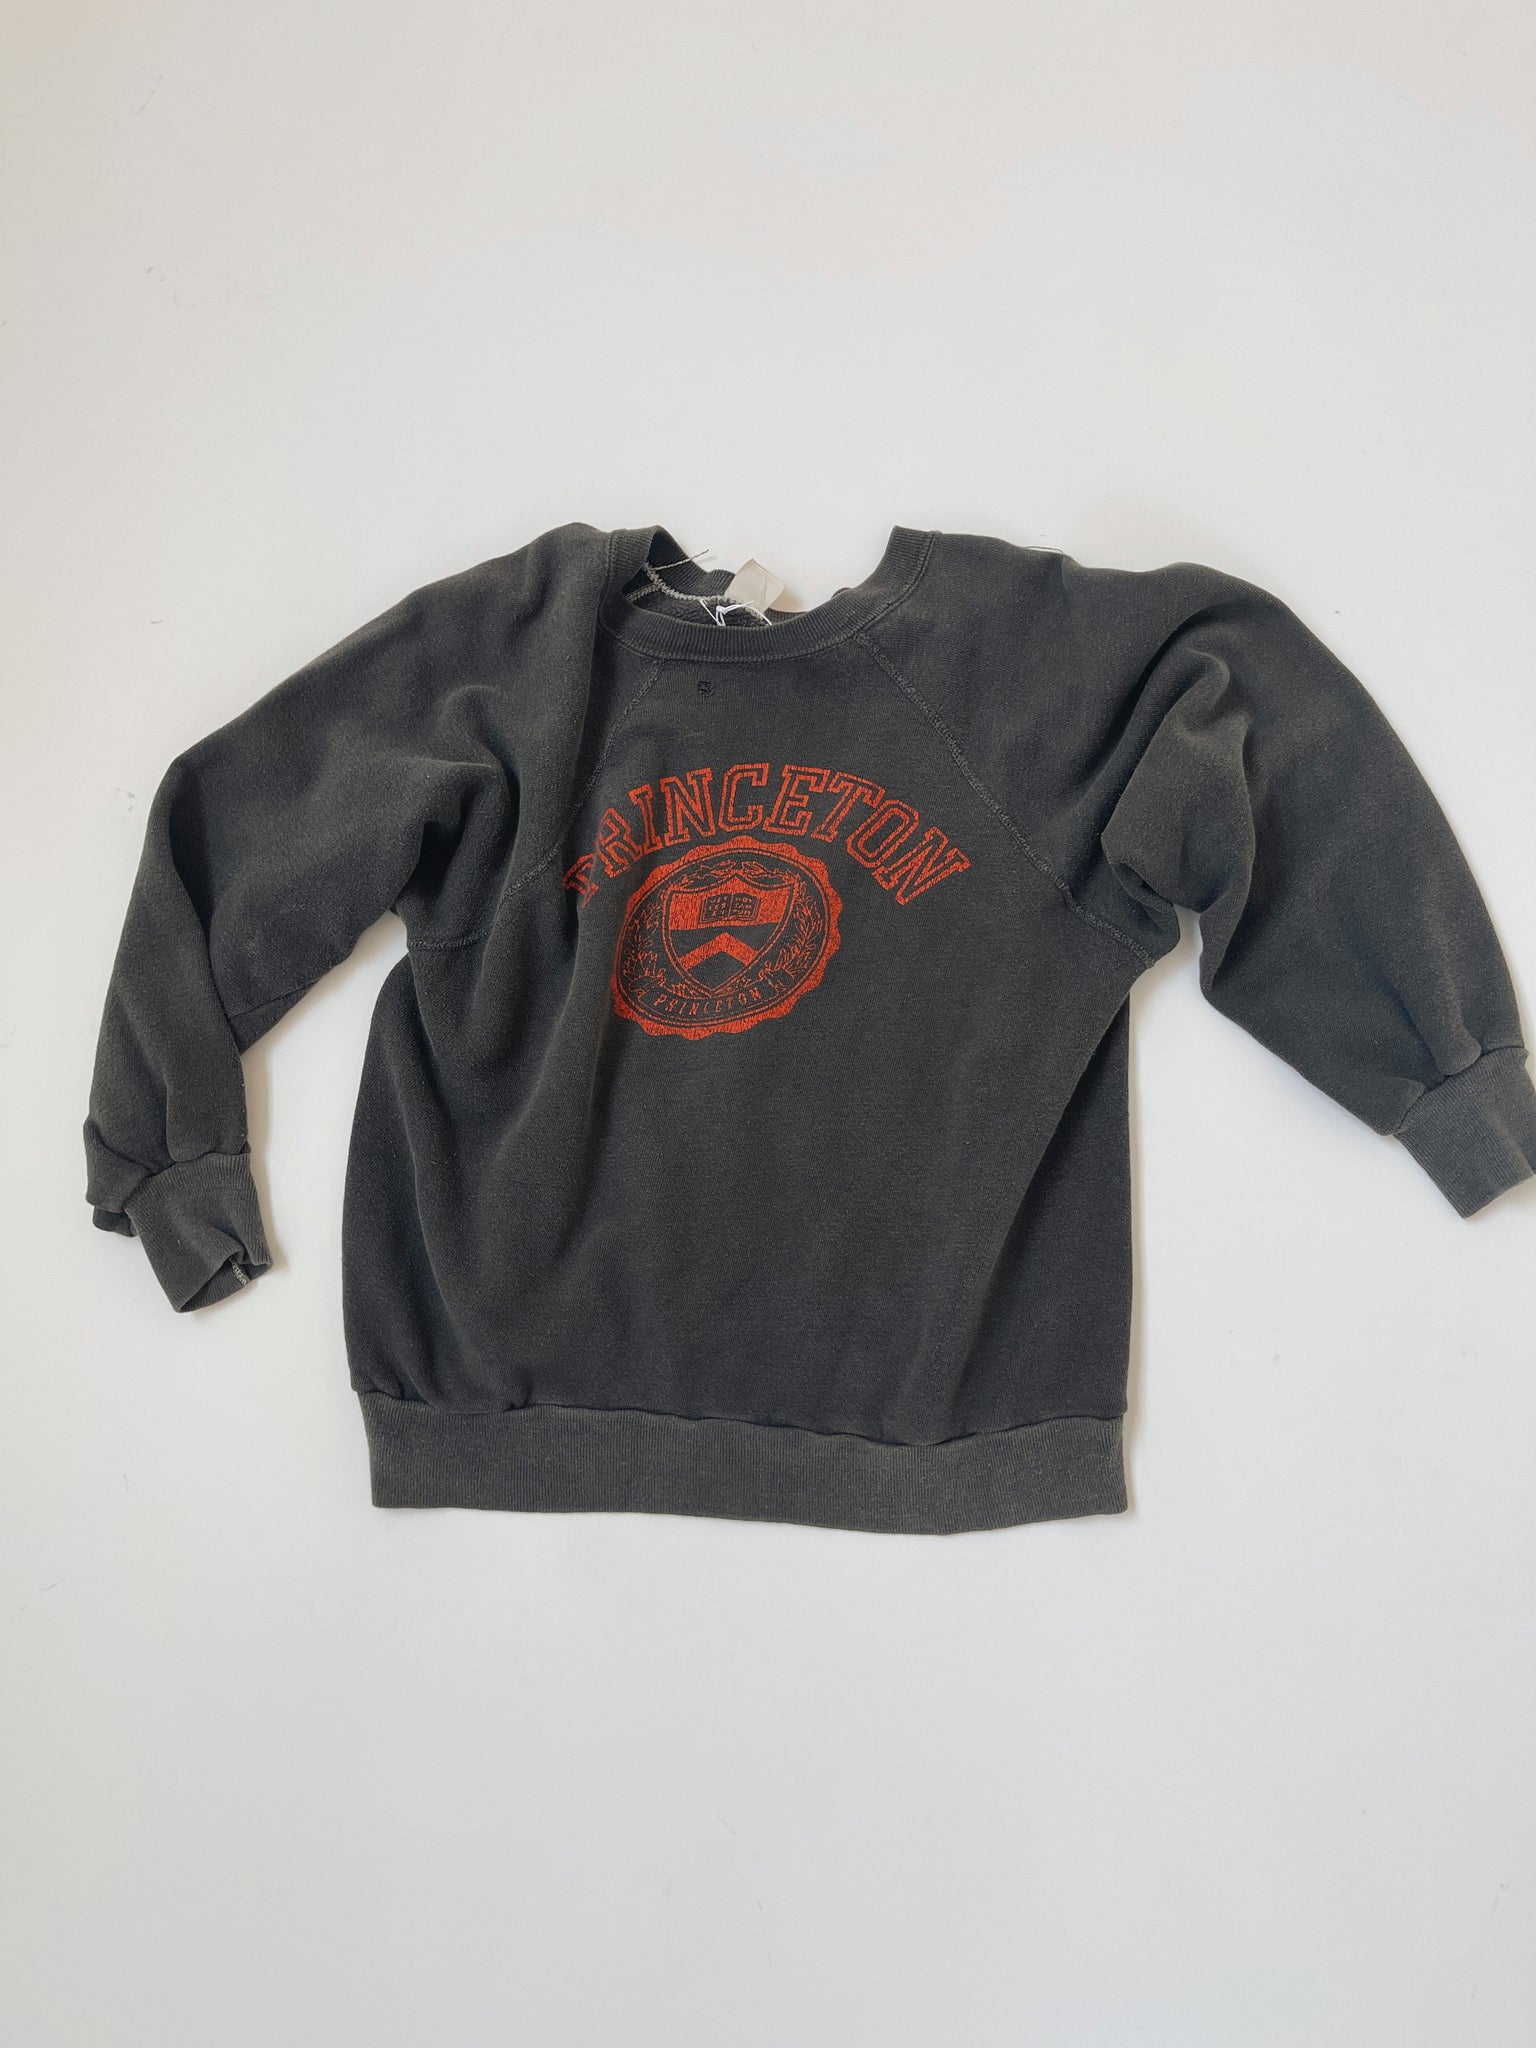 Vintage Princeton Sweatshirt